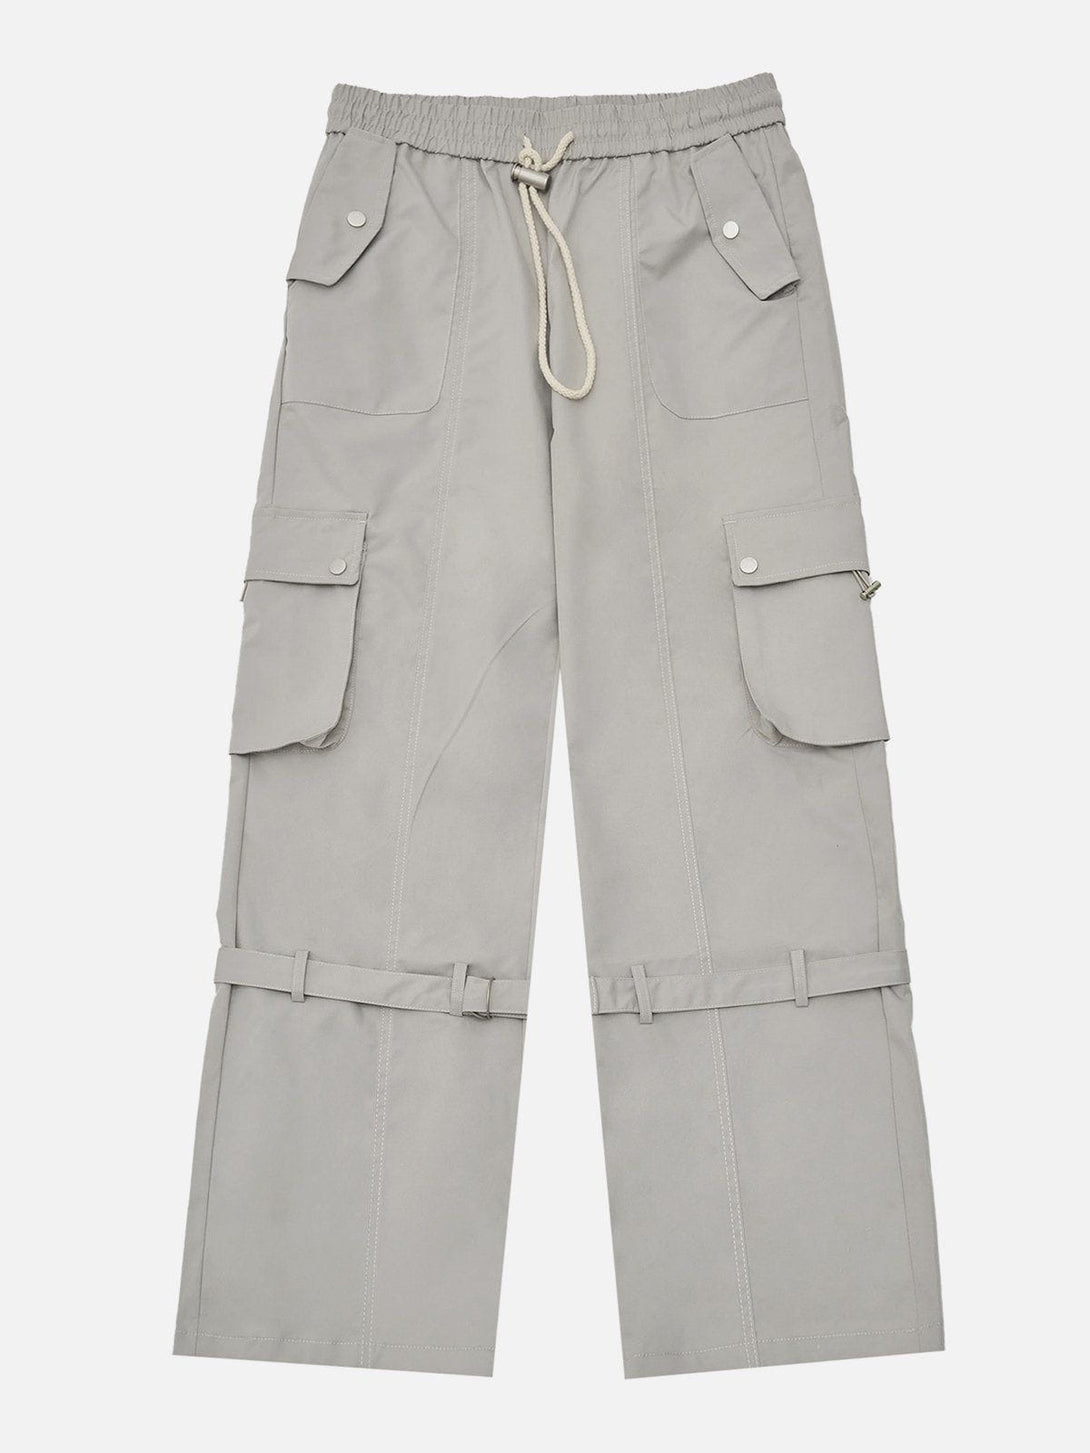 Majesda® - Puttee Multi-pocket Cargo Pants outfit ideas streetwear fashion